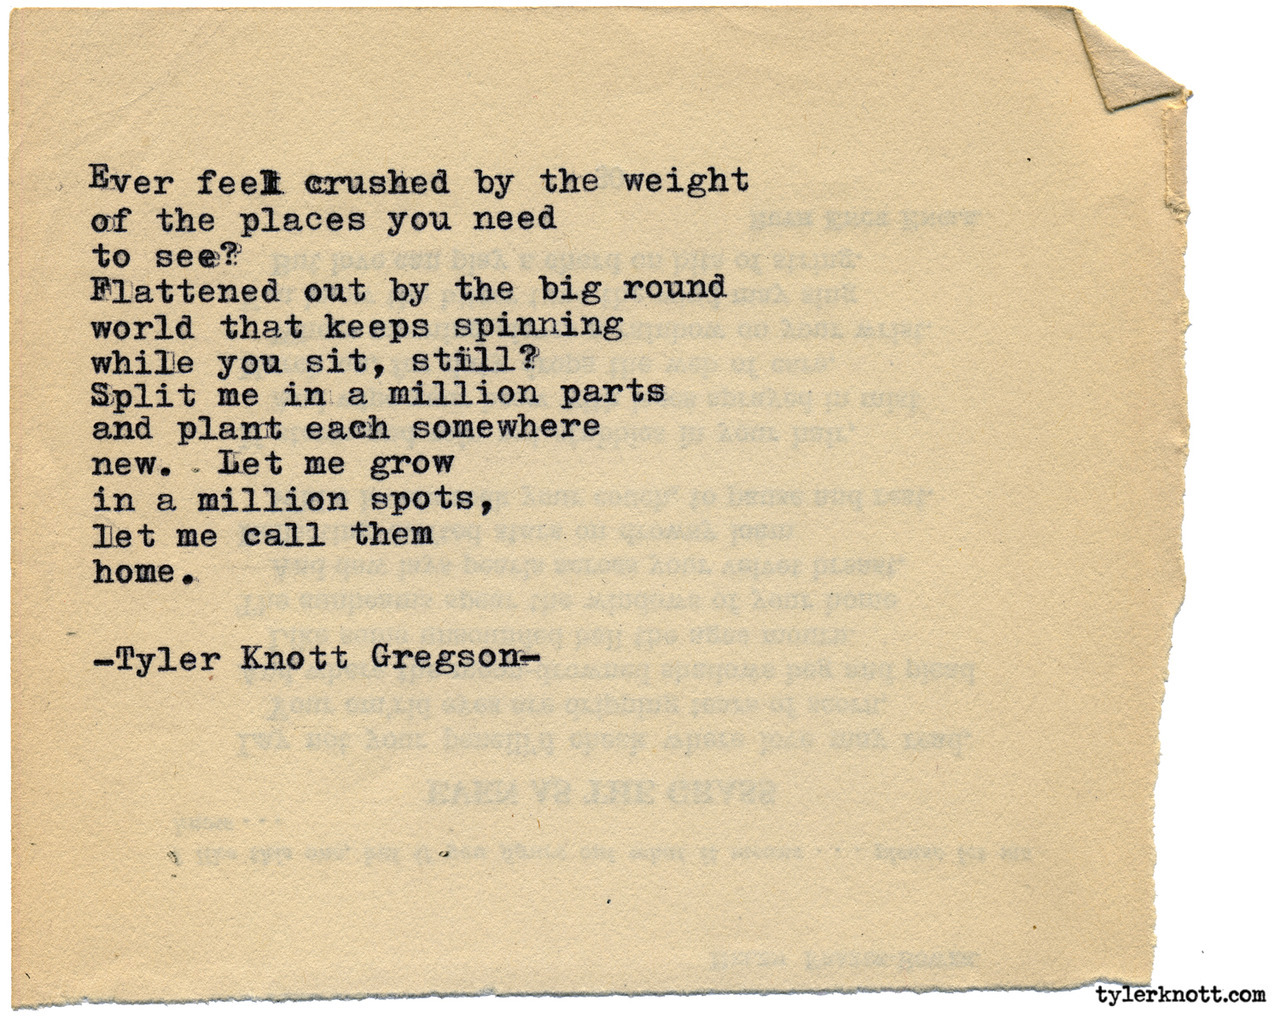 Tyler Knott Gregson — Typewriter Series #2179 by Tyler Knott Gregson